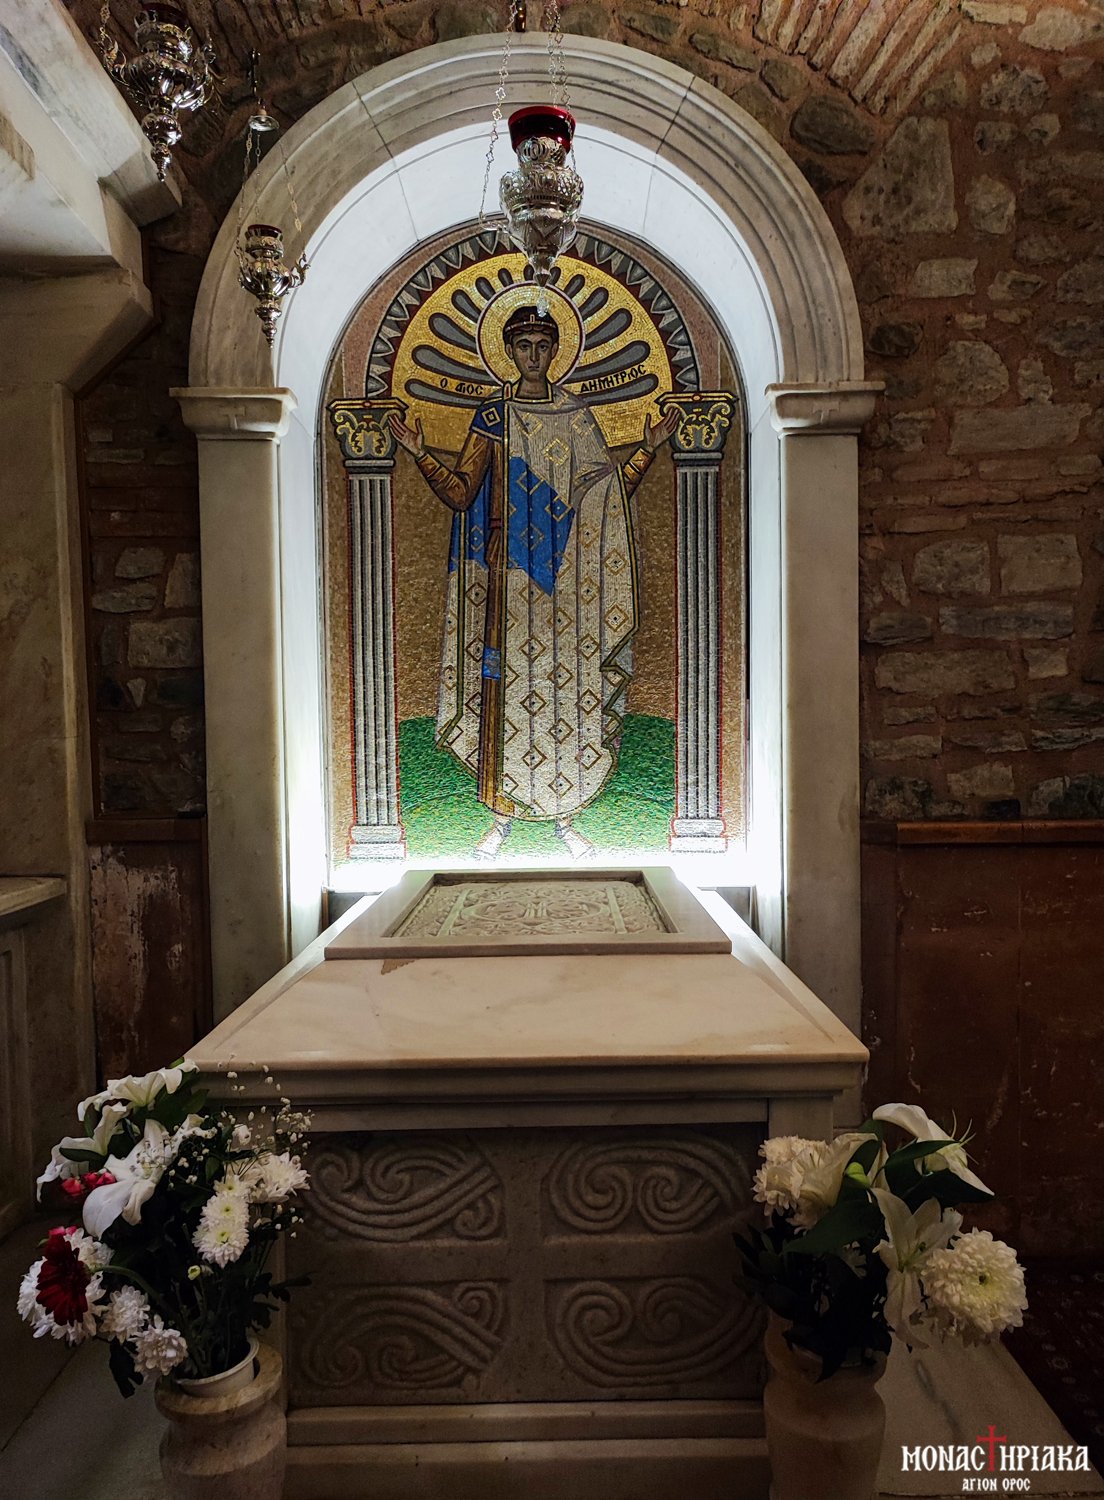 The Chapel of the tomb of Saint Dimitrios